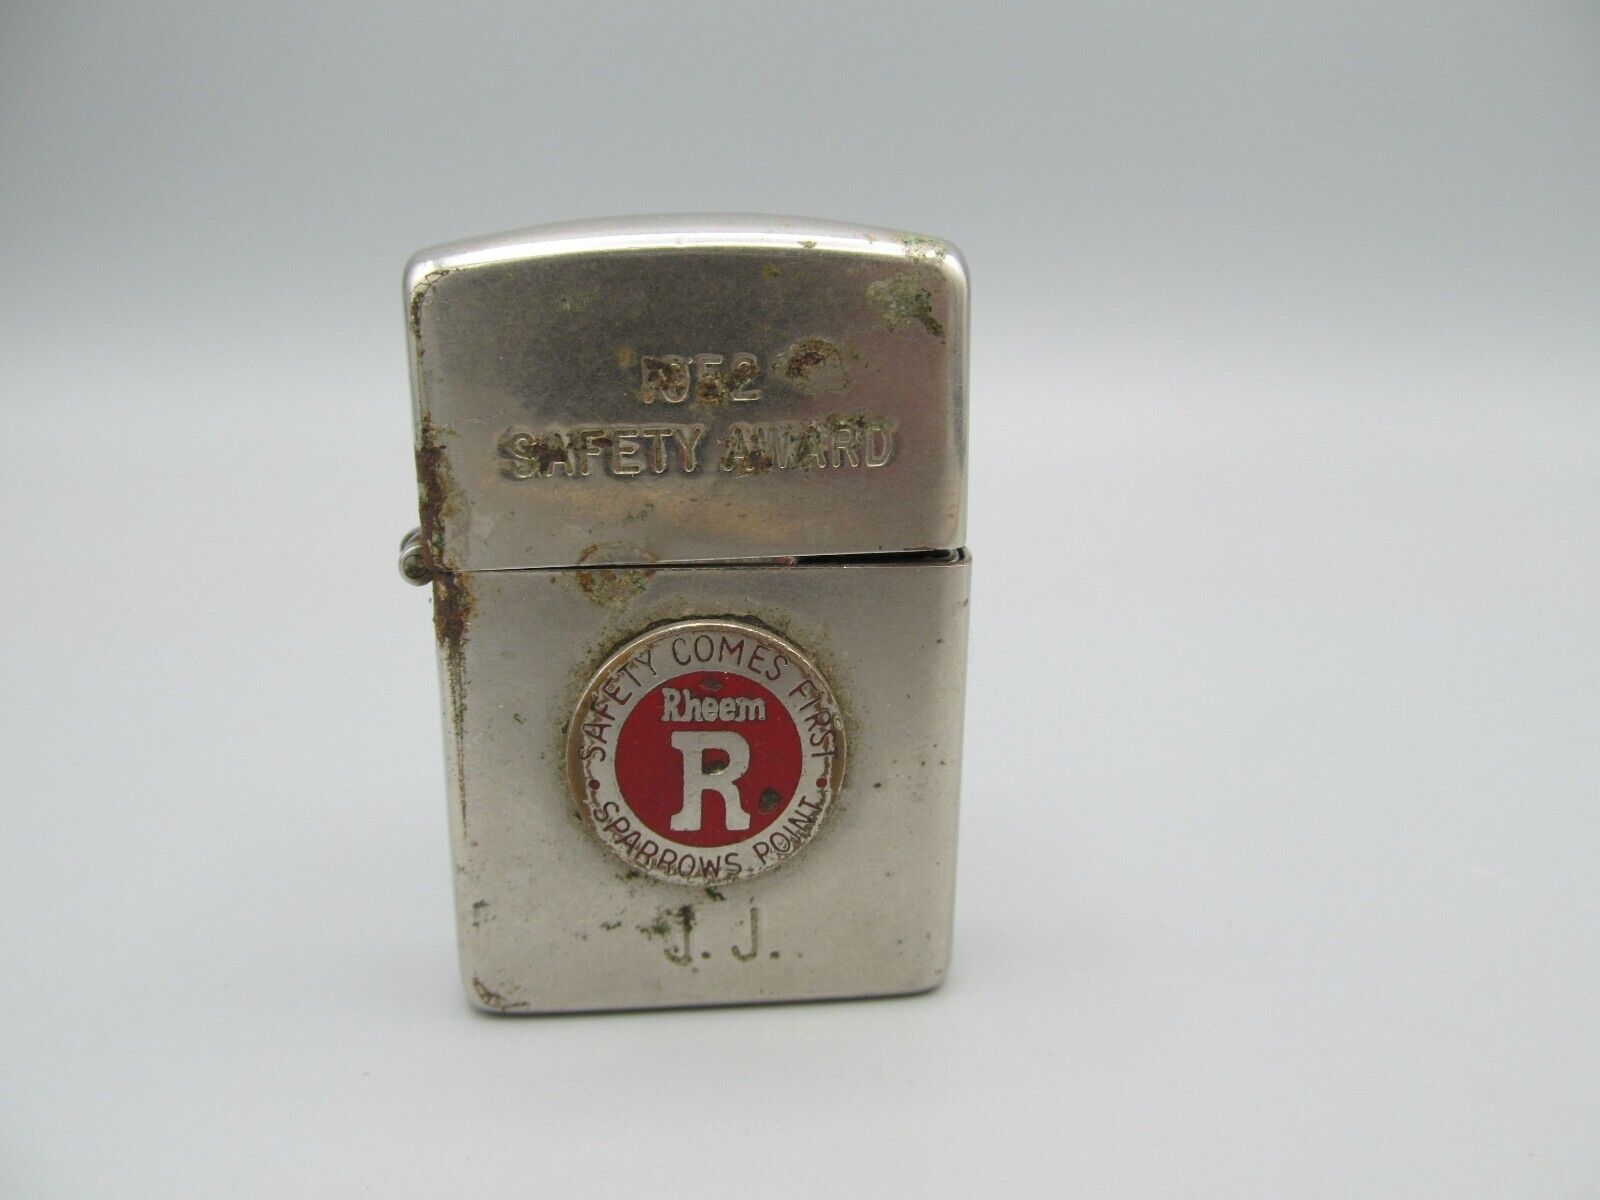 Vtg c.1937-1950 Zippo Cigarette Lighter Rheem Sparrows Point 1952 Safety Award